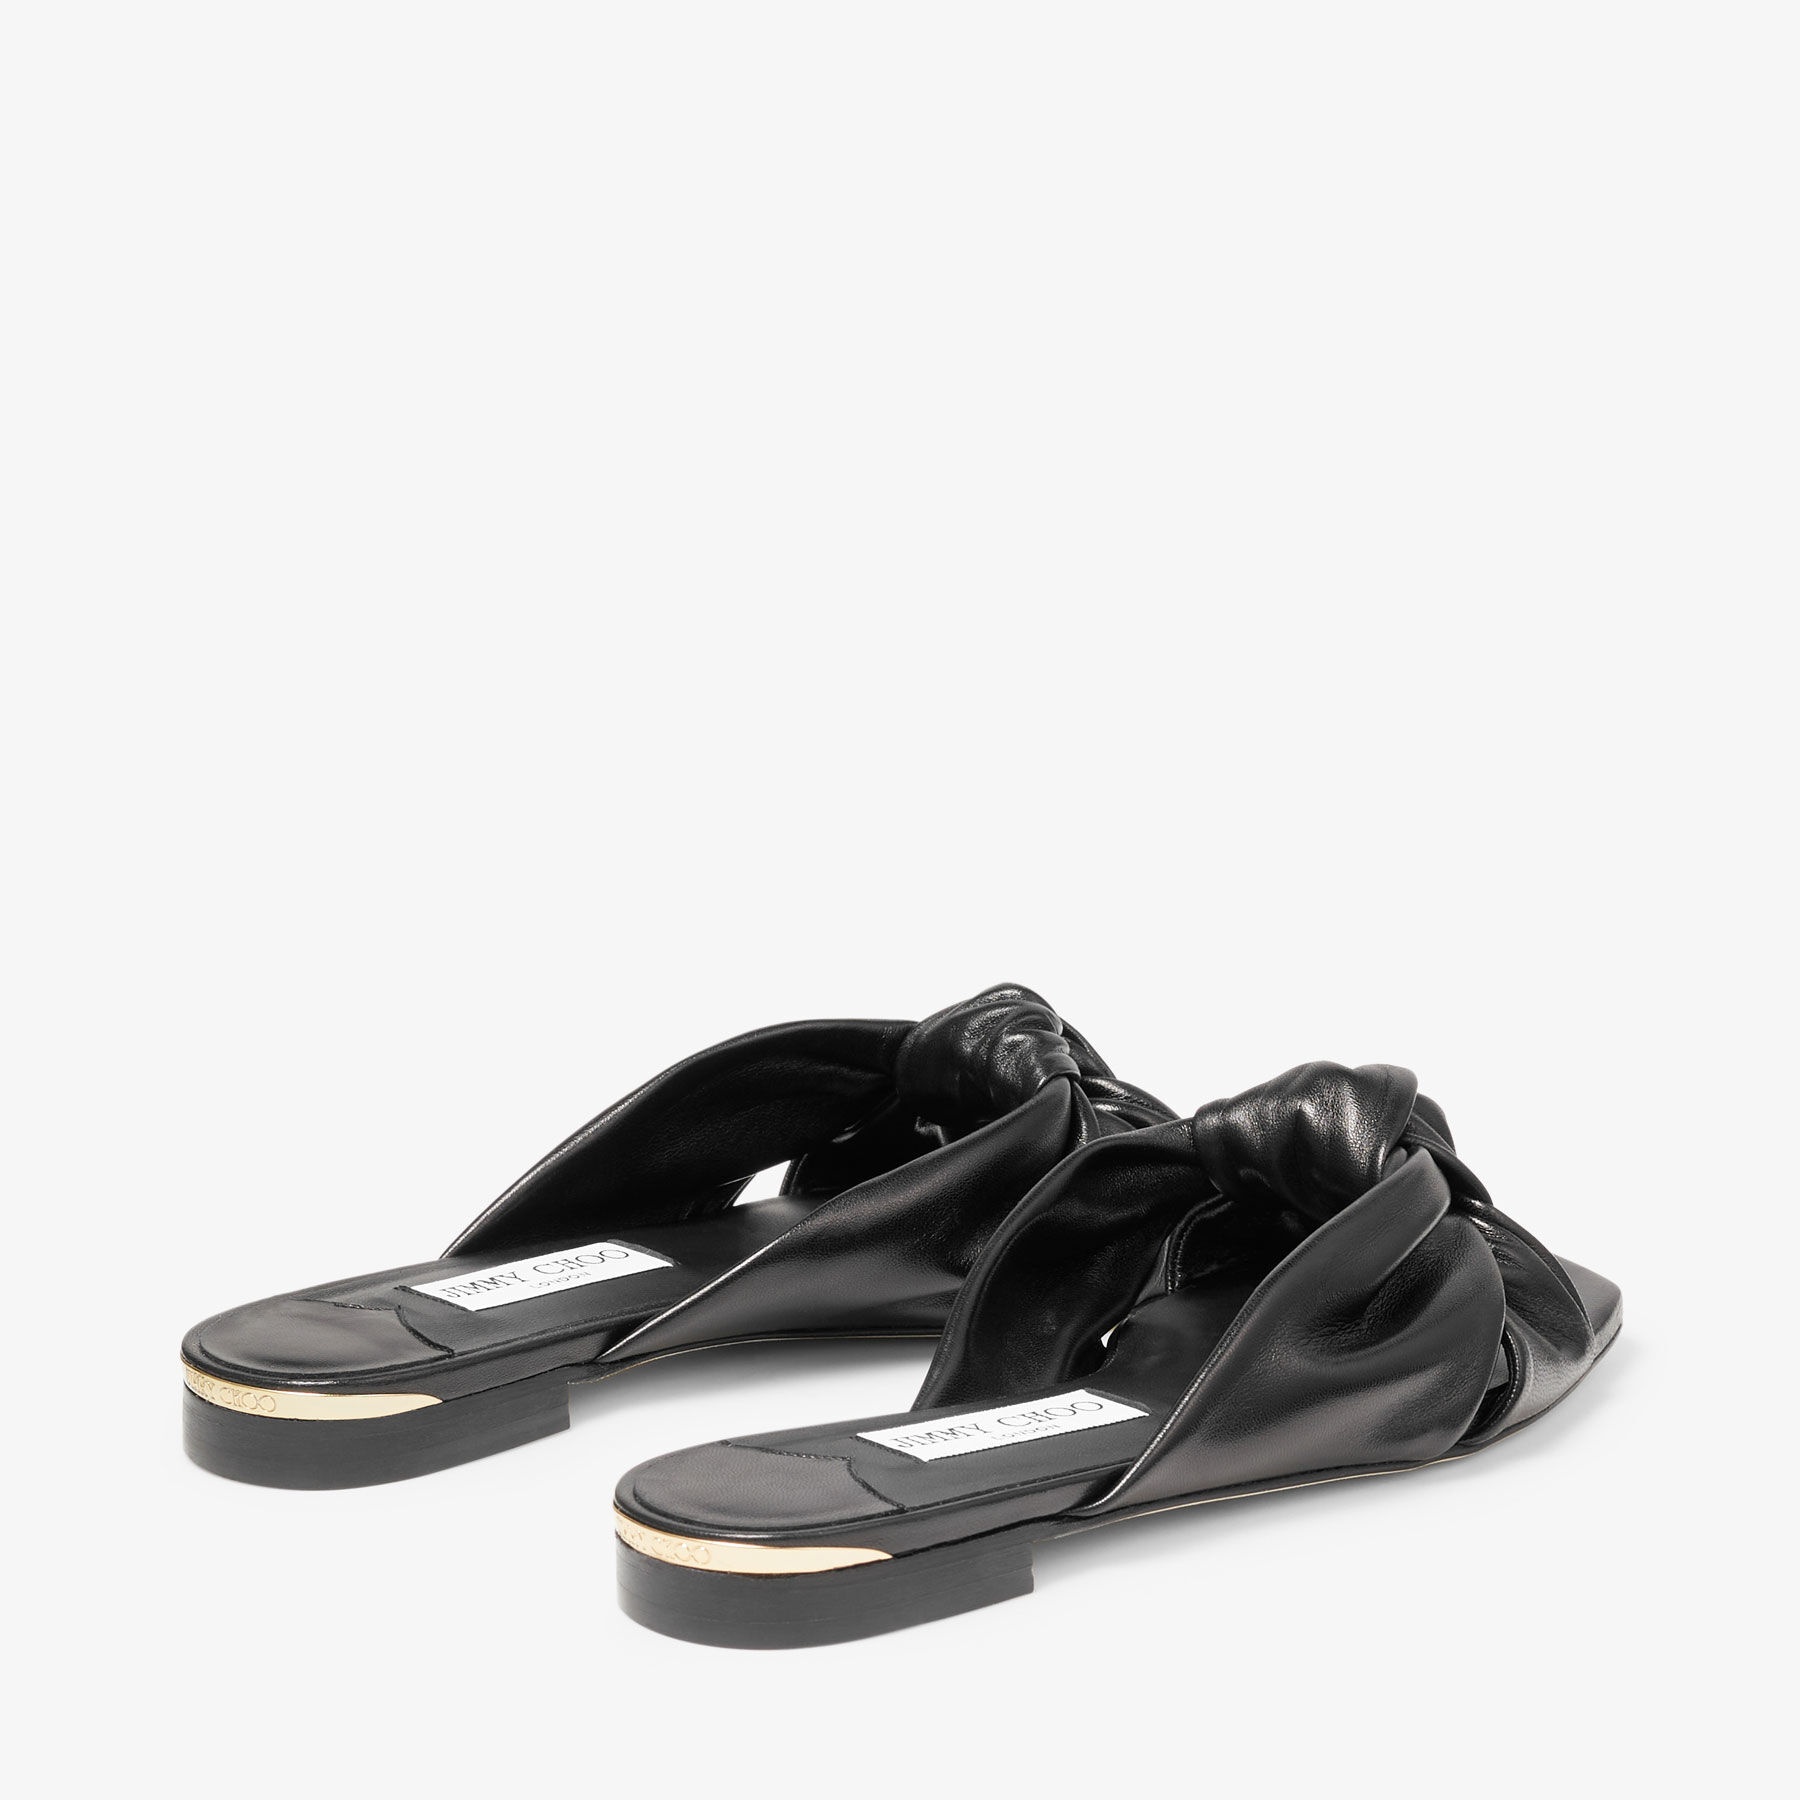 Avenue Flat
Black Nappa Leather Flat Sandals - 5